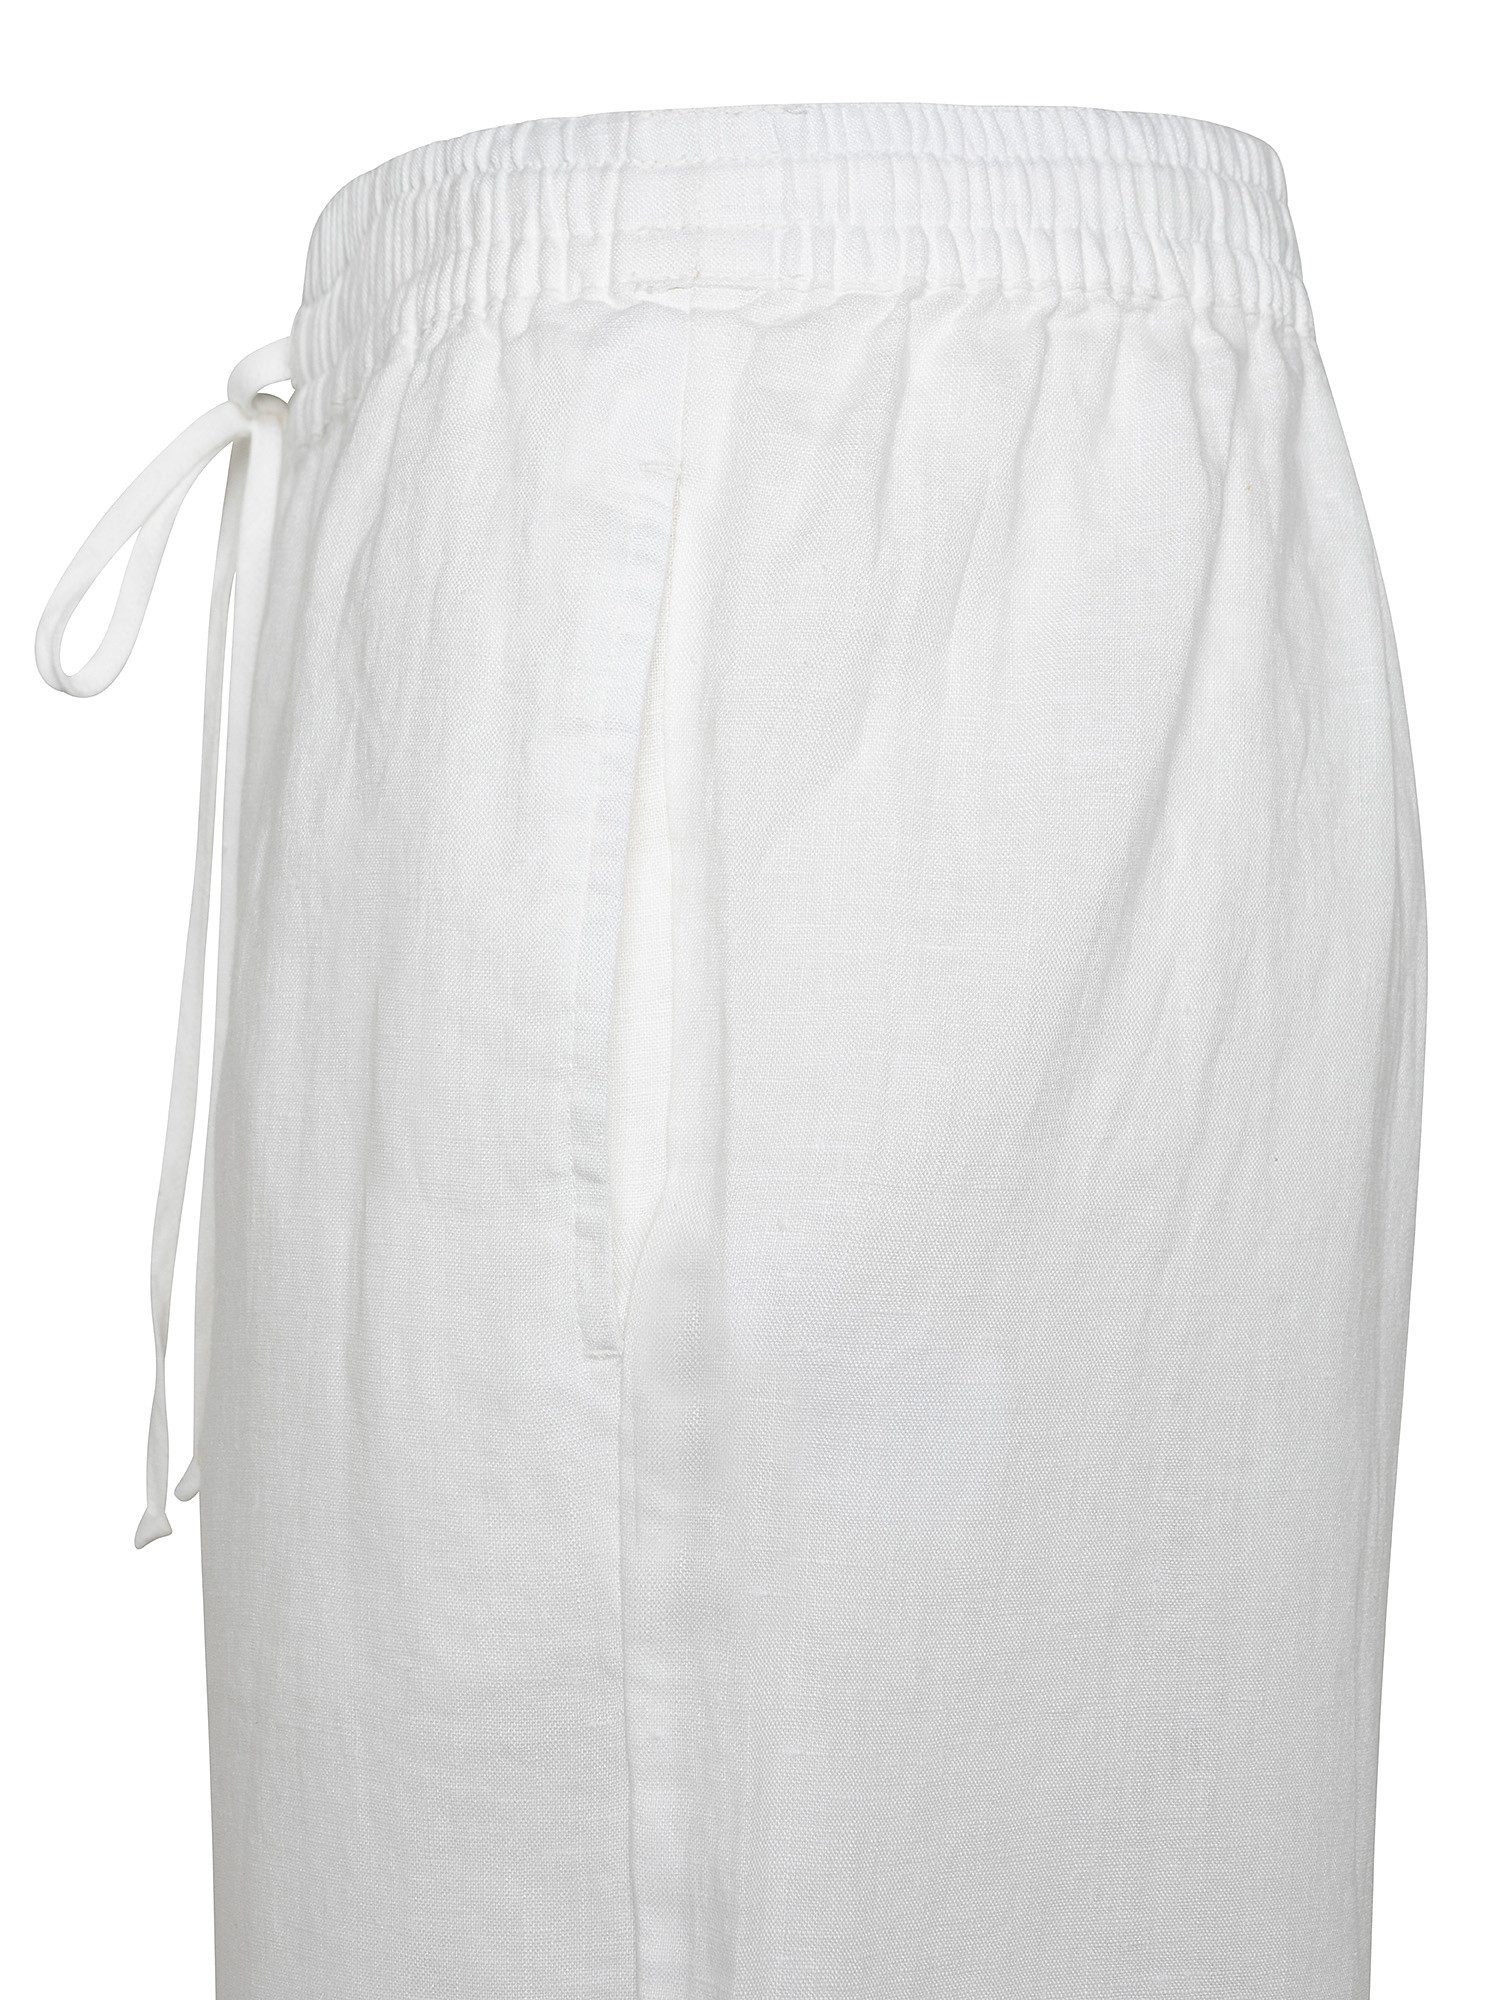 Pantalone a gamba ampia in lino, Bianco, large image number 2